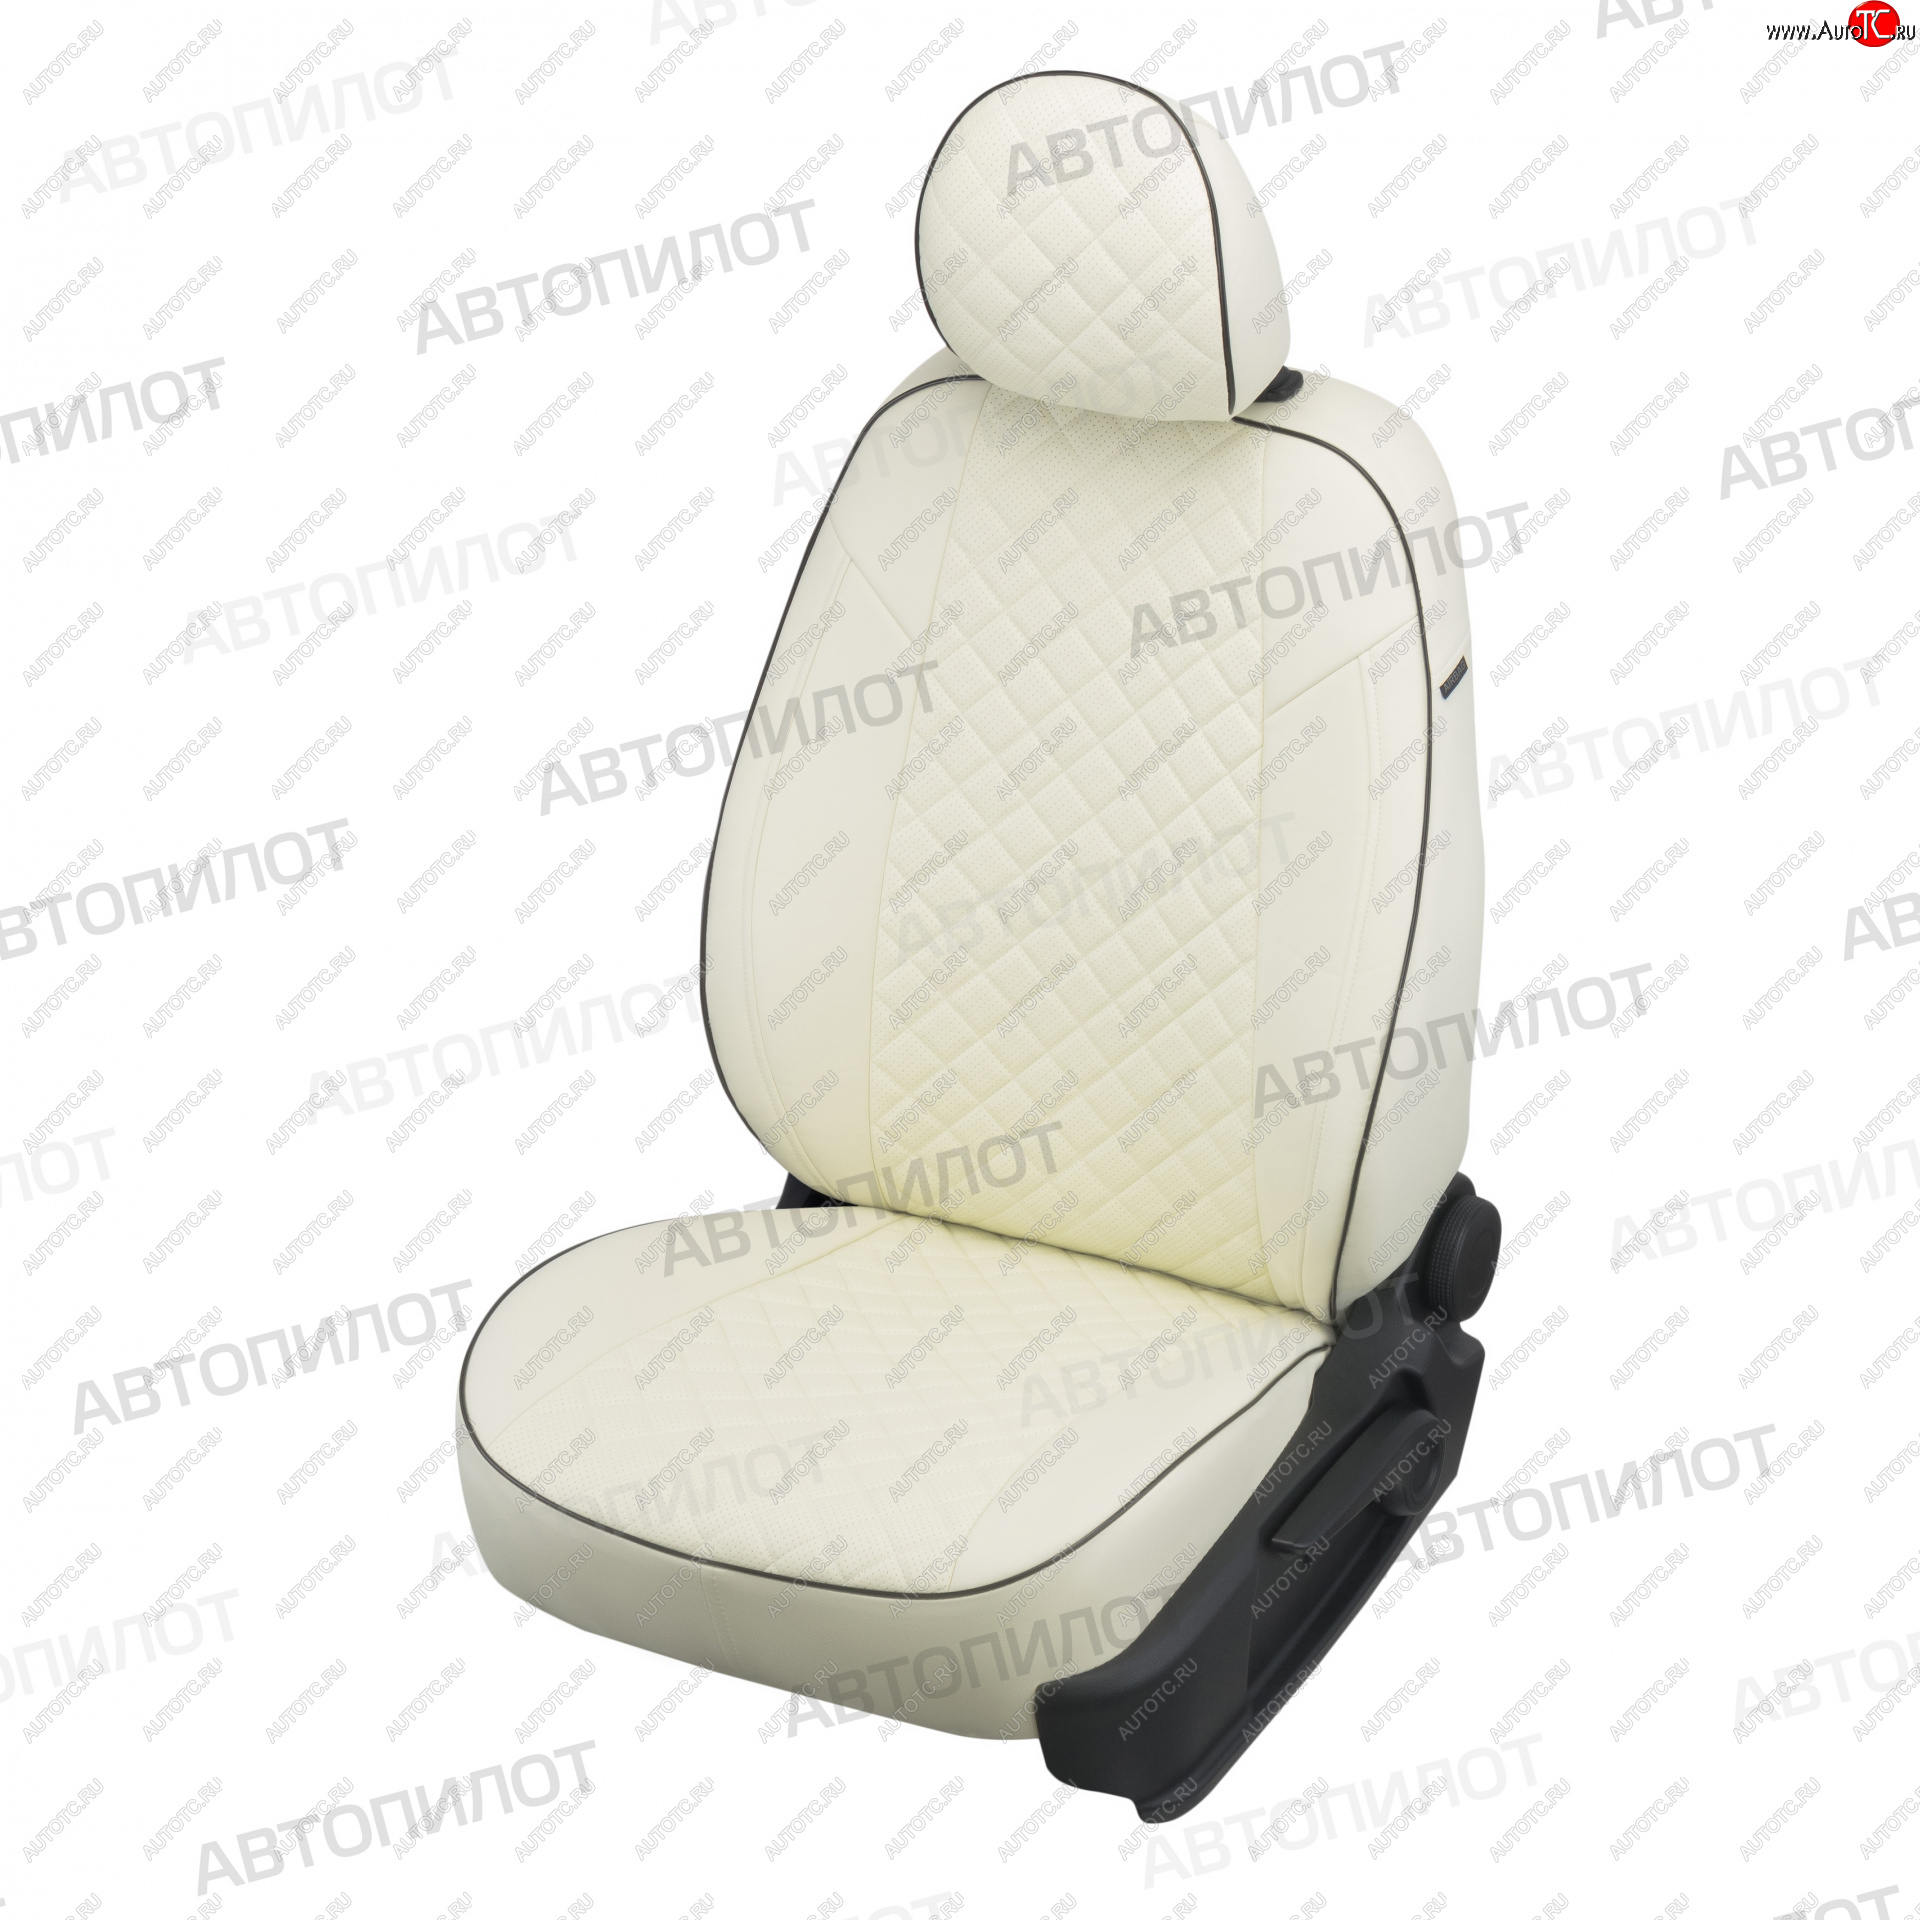 13 999 р. Чехлы сидений (экокожа) Автопилот Ромб  KIA Rio  1 DC (2000-2005) (белый)